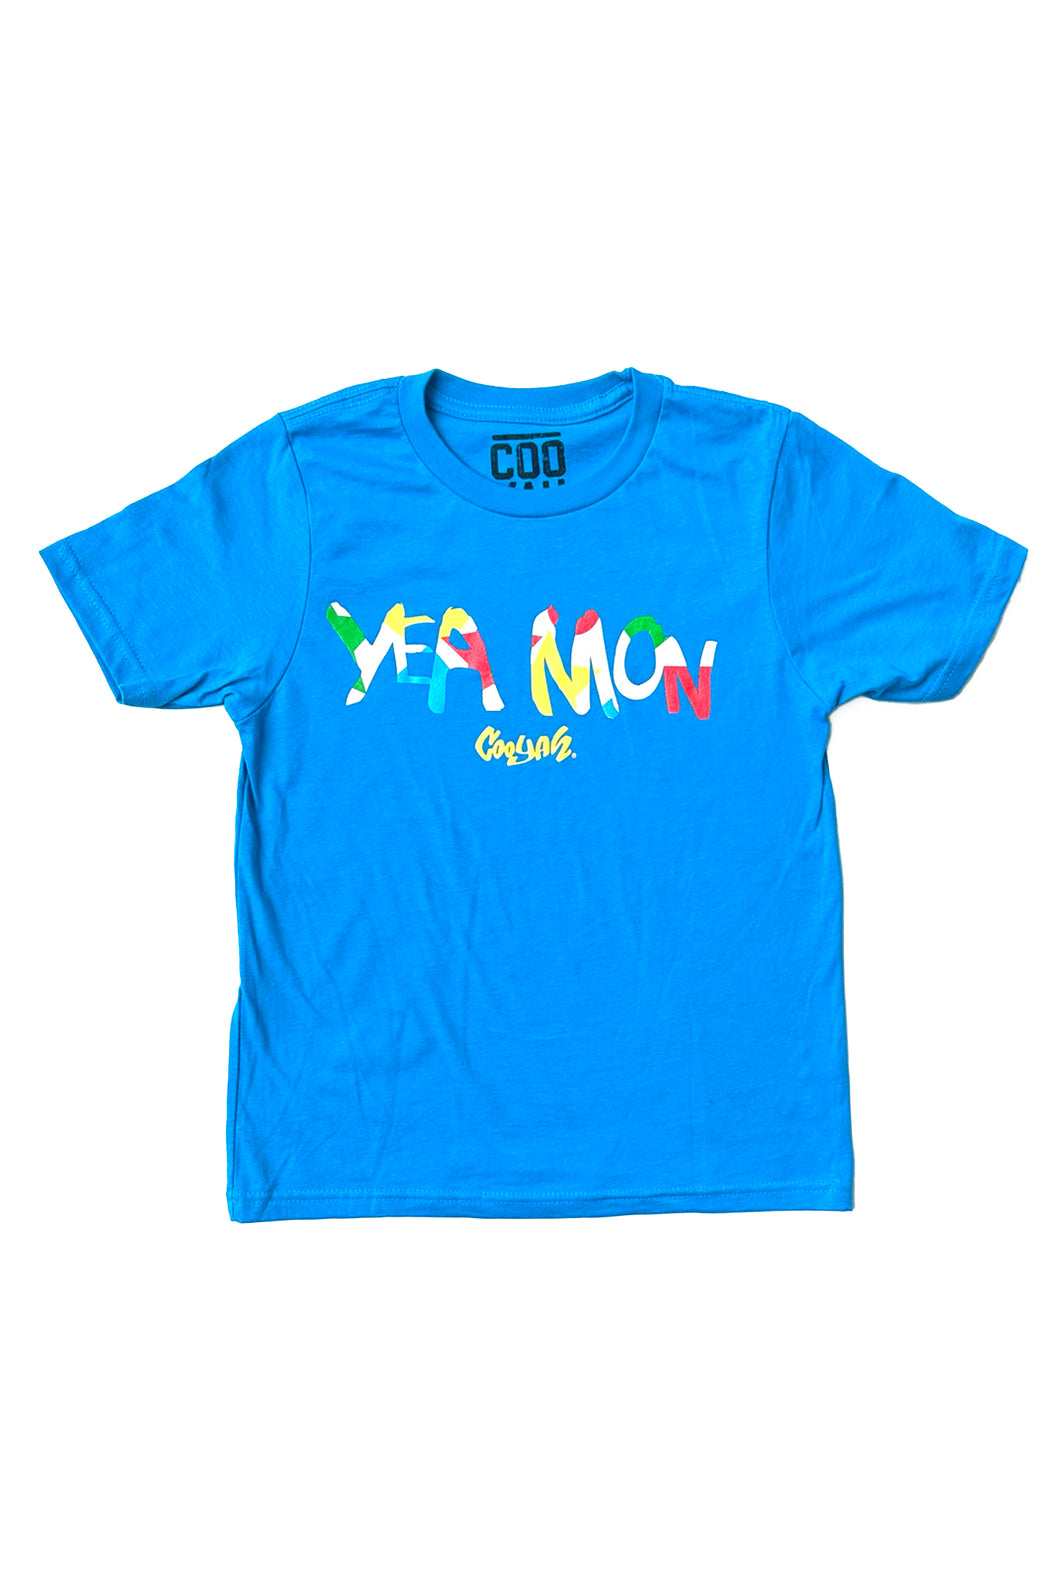 Cooyah Jamaica. Kid's Yea Mon blue graphic tee.  Reggae style, ringspun cotton.  Jamaican clothing brand. IRIE